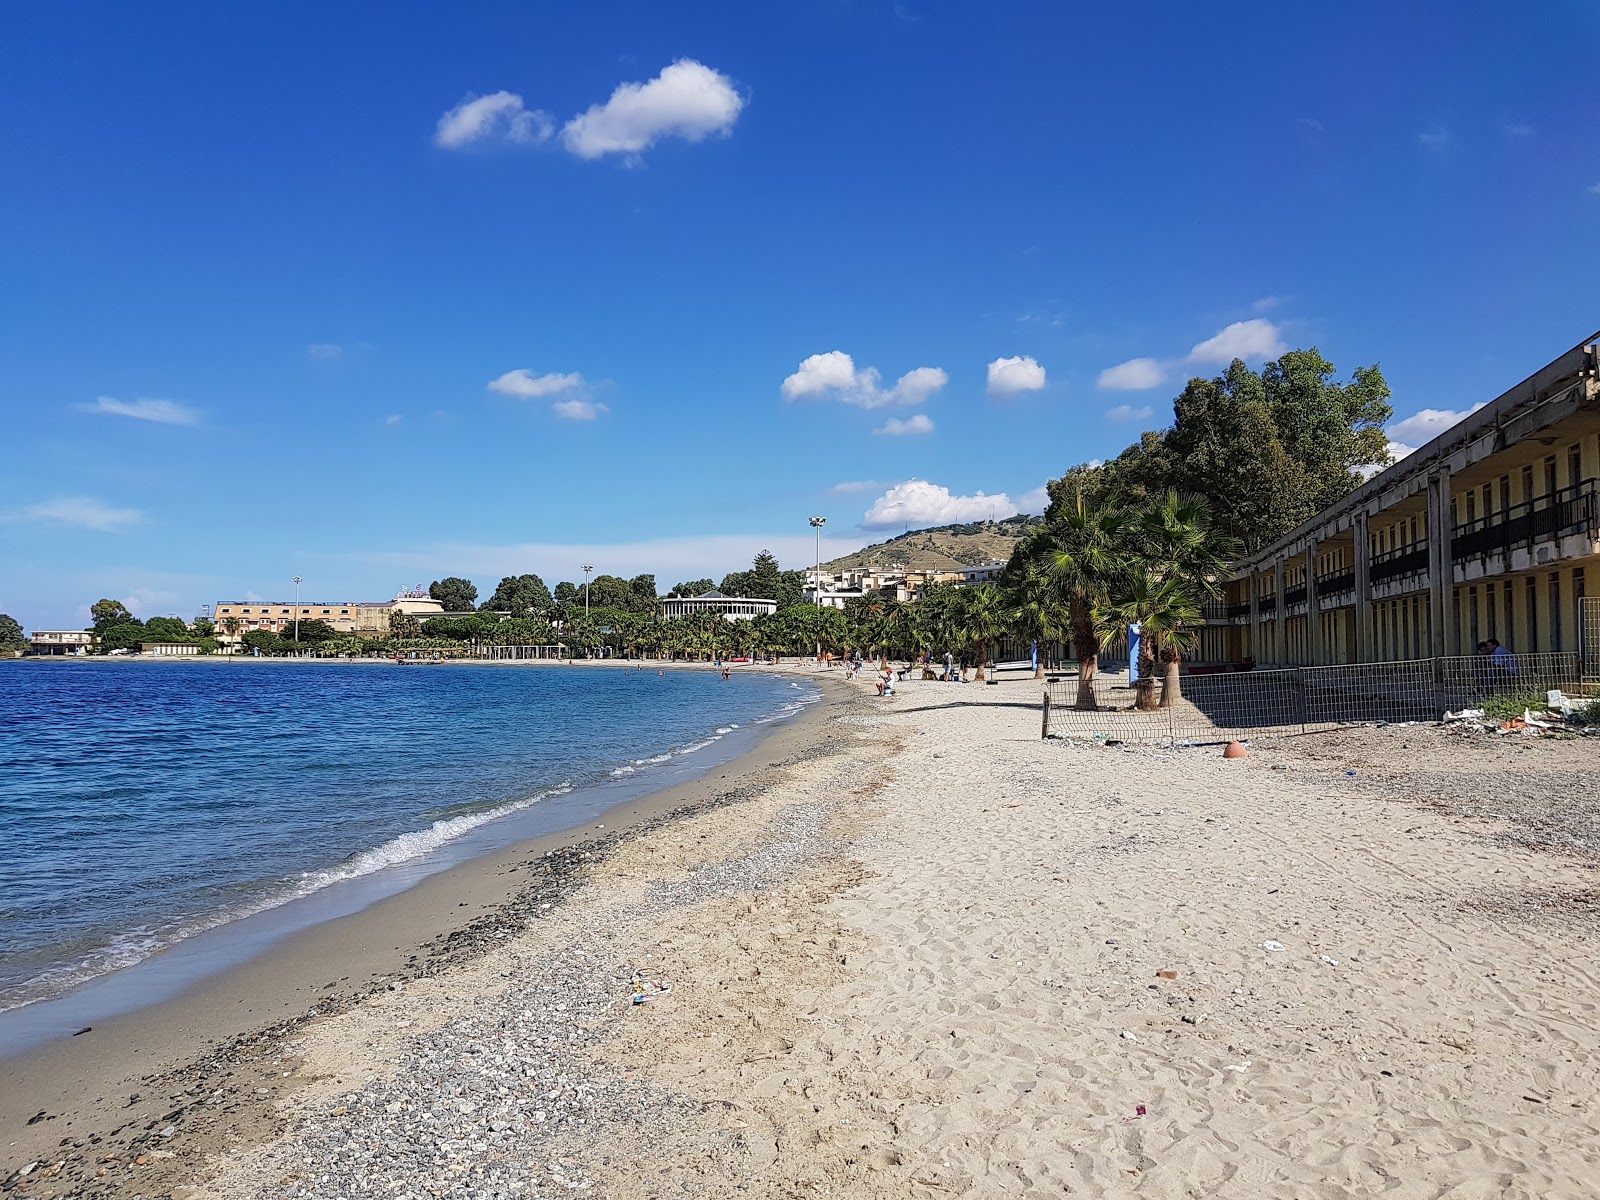 Photo of Reggio Calabria beach with brown sand surface